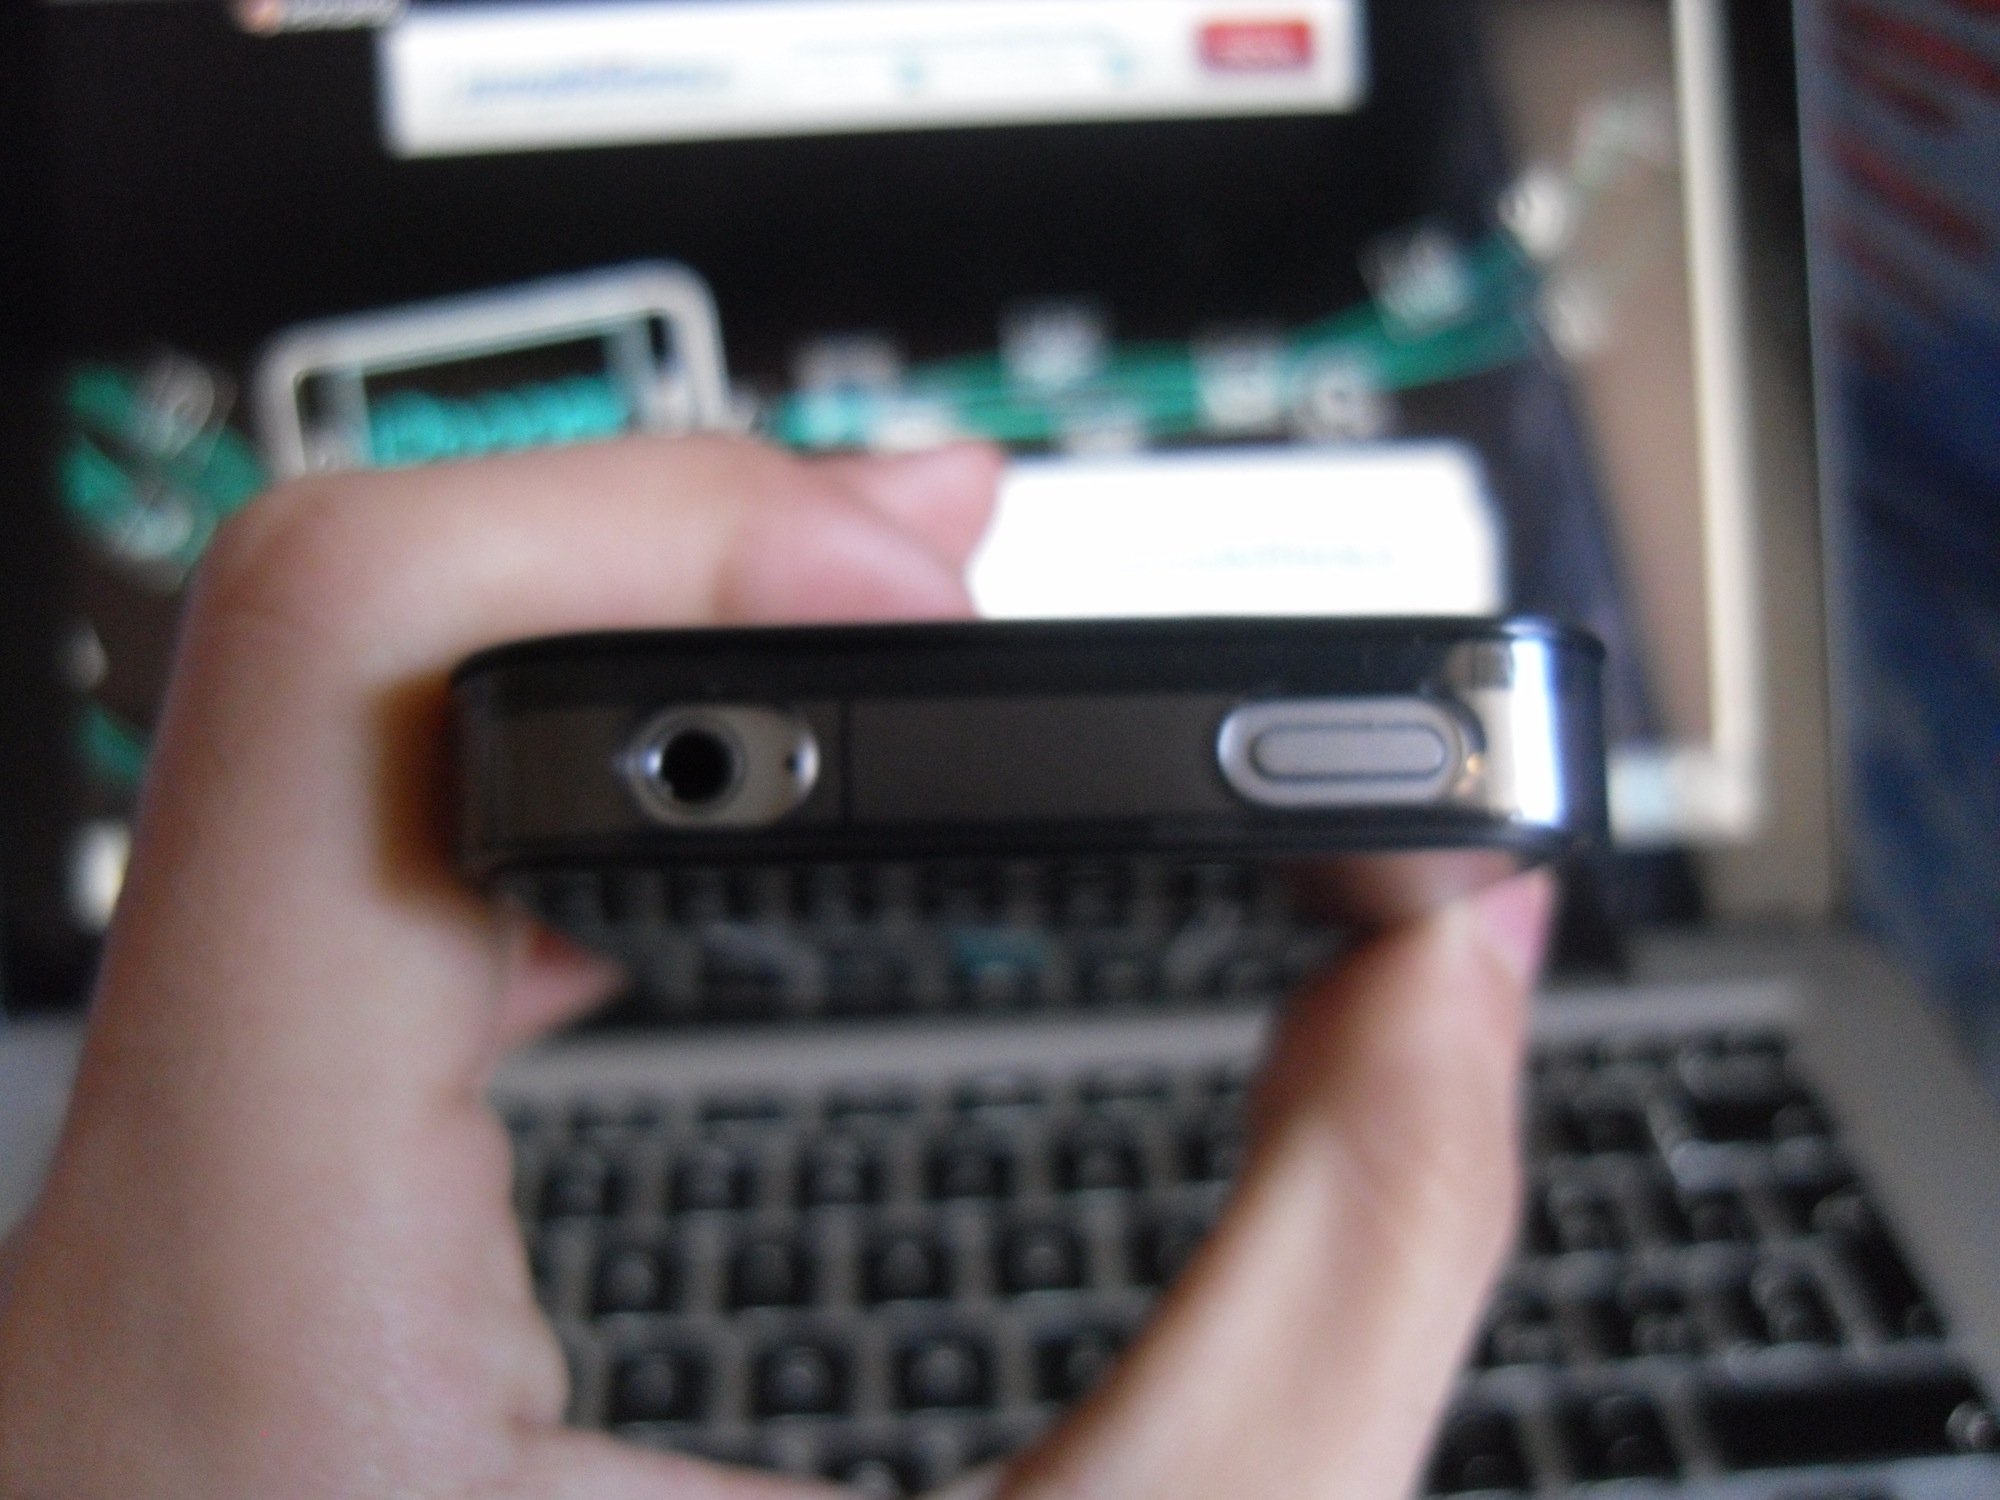 Exolife Battery Case per iPhone 4: la recensione